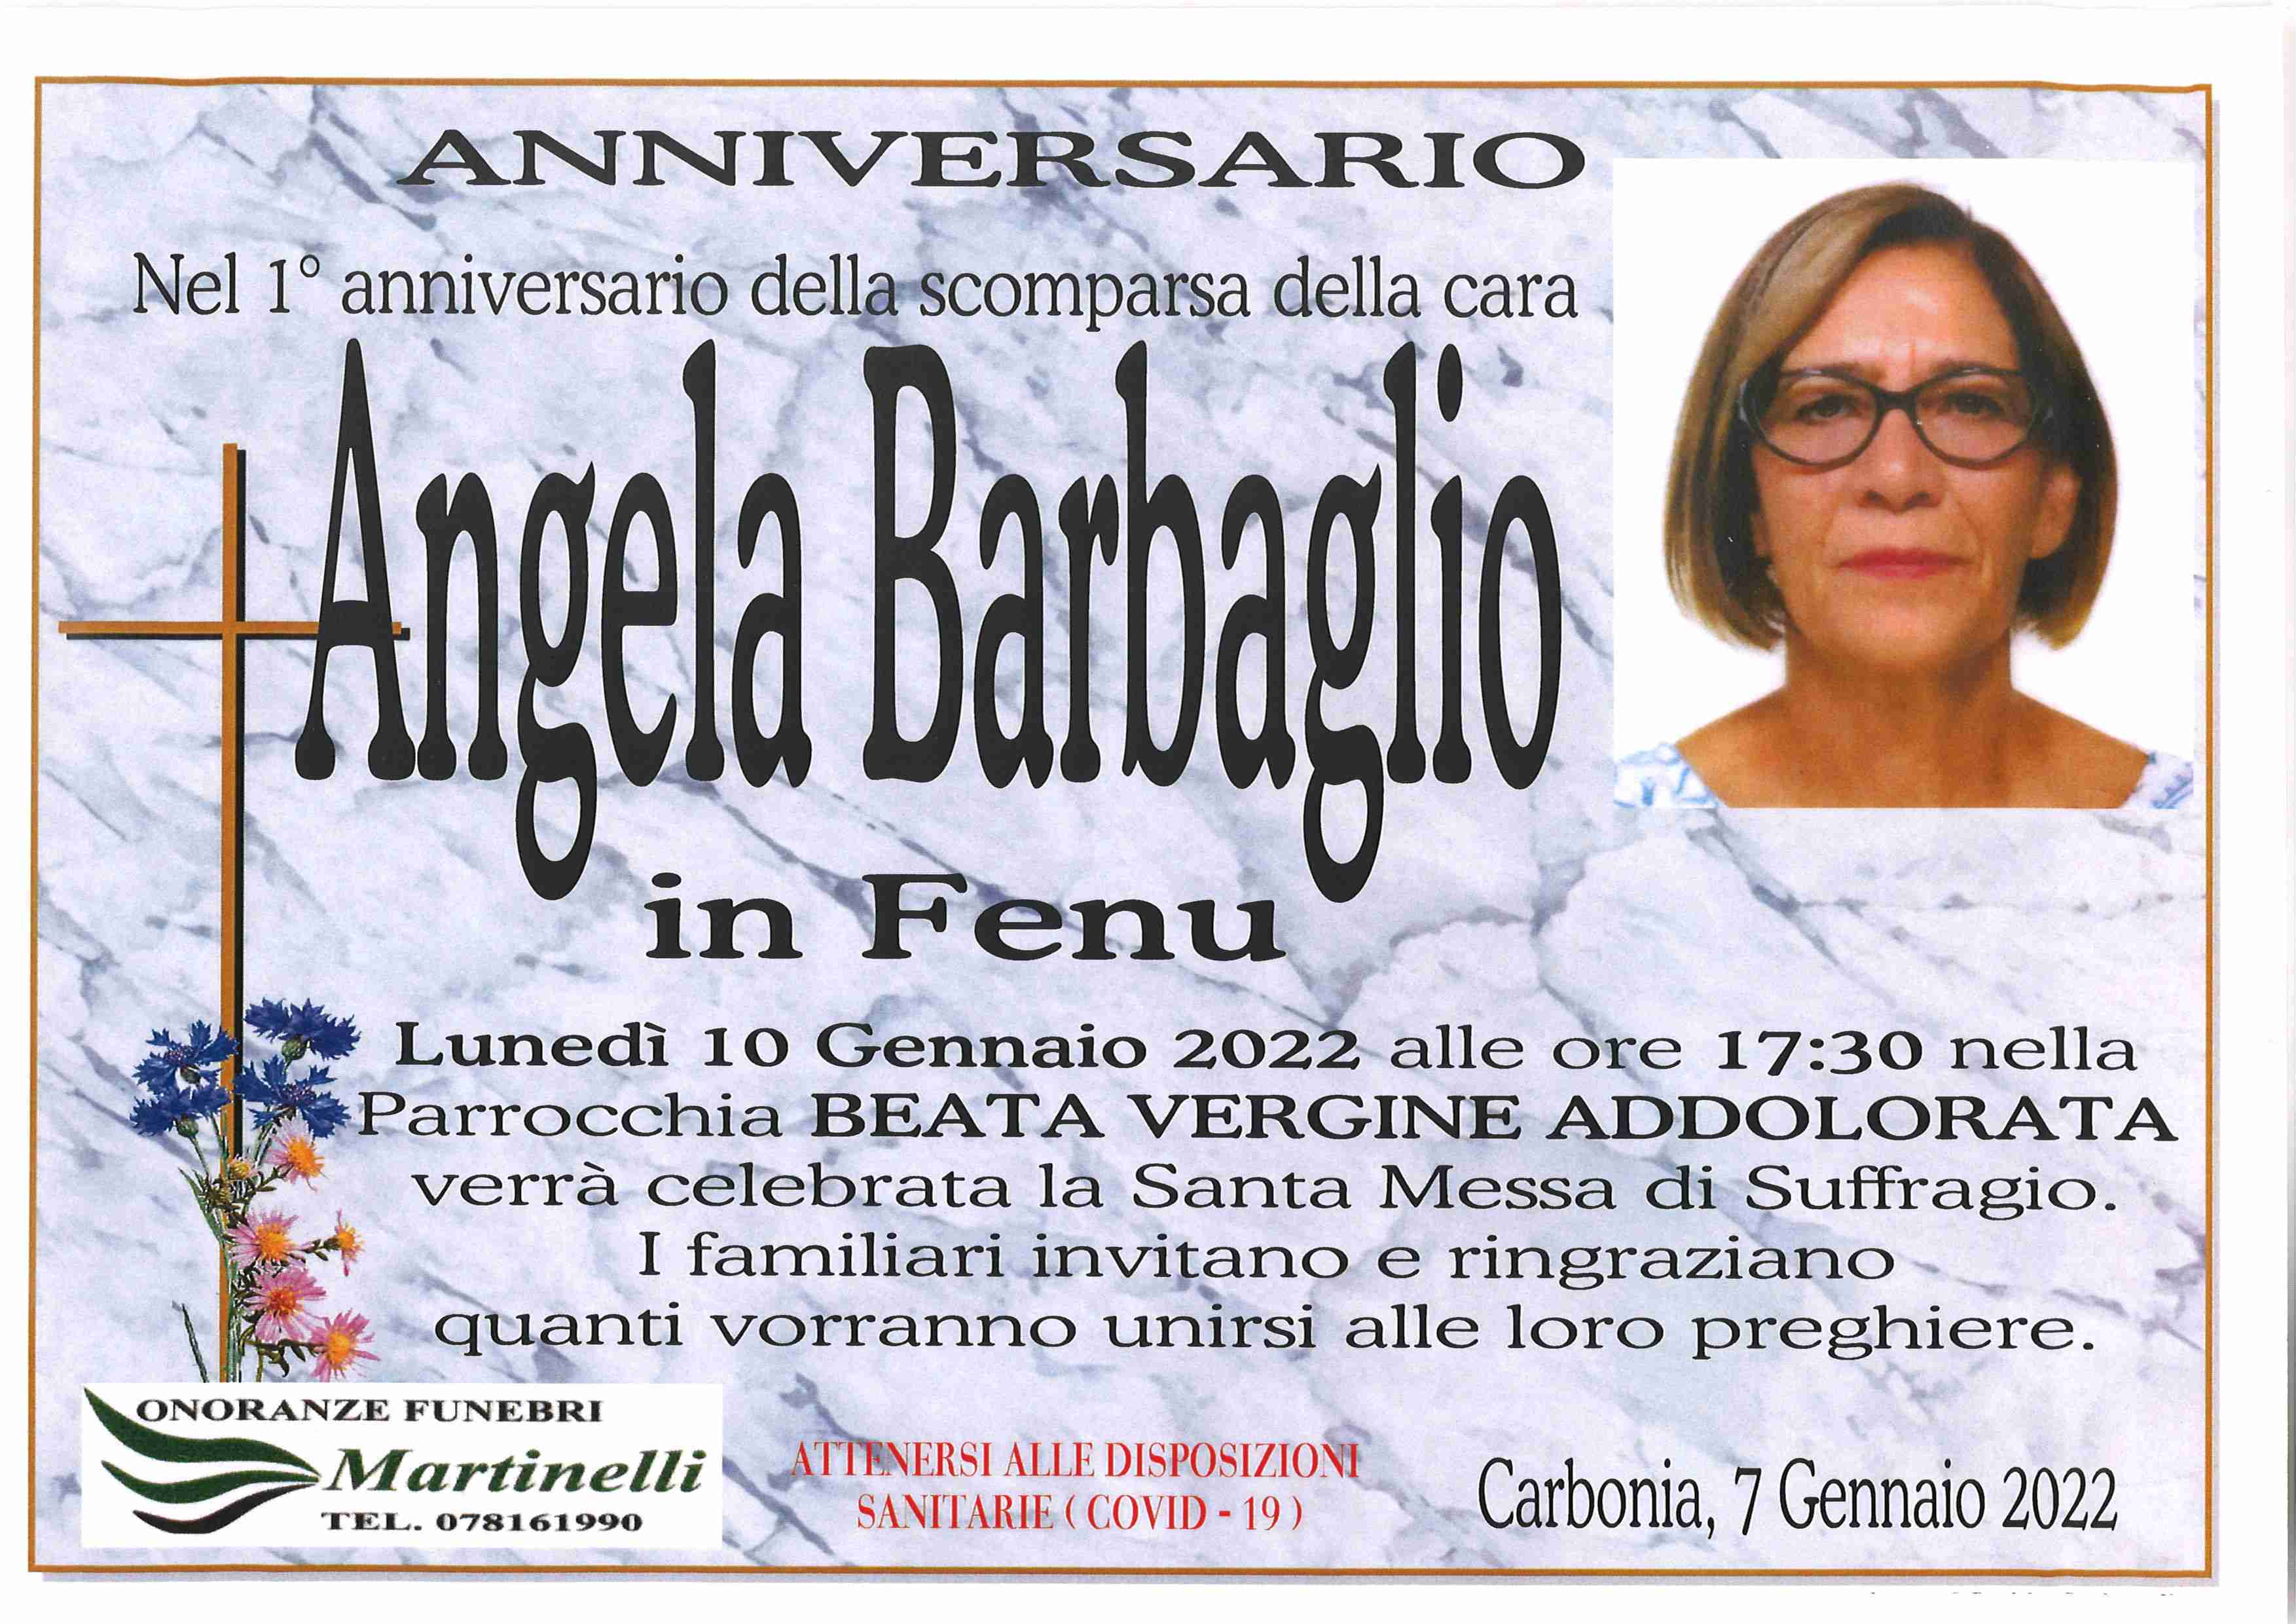 Angela Barbaglio